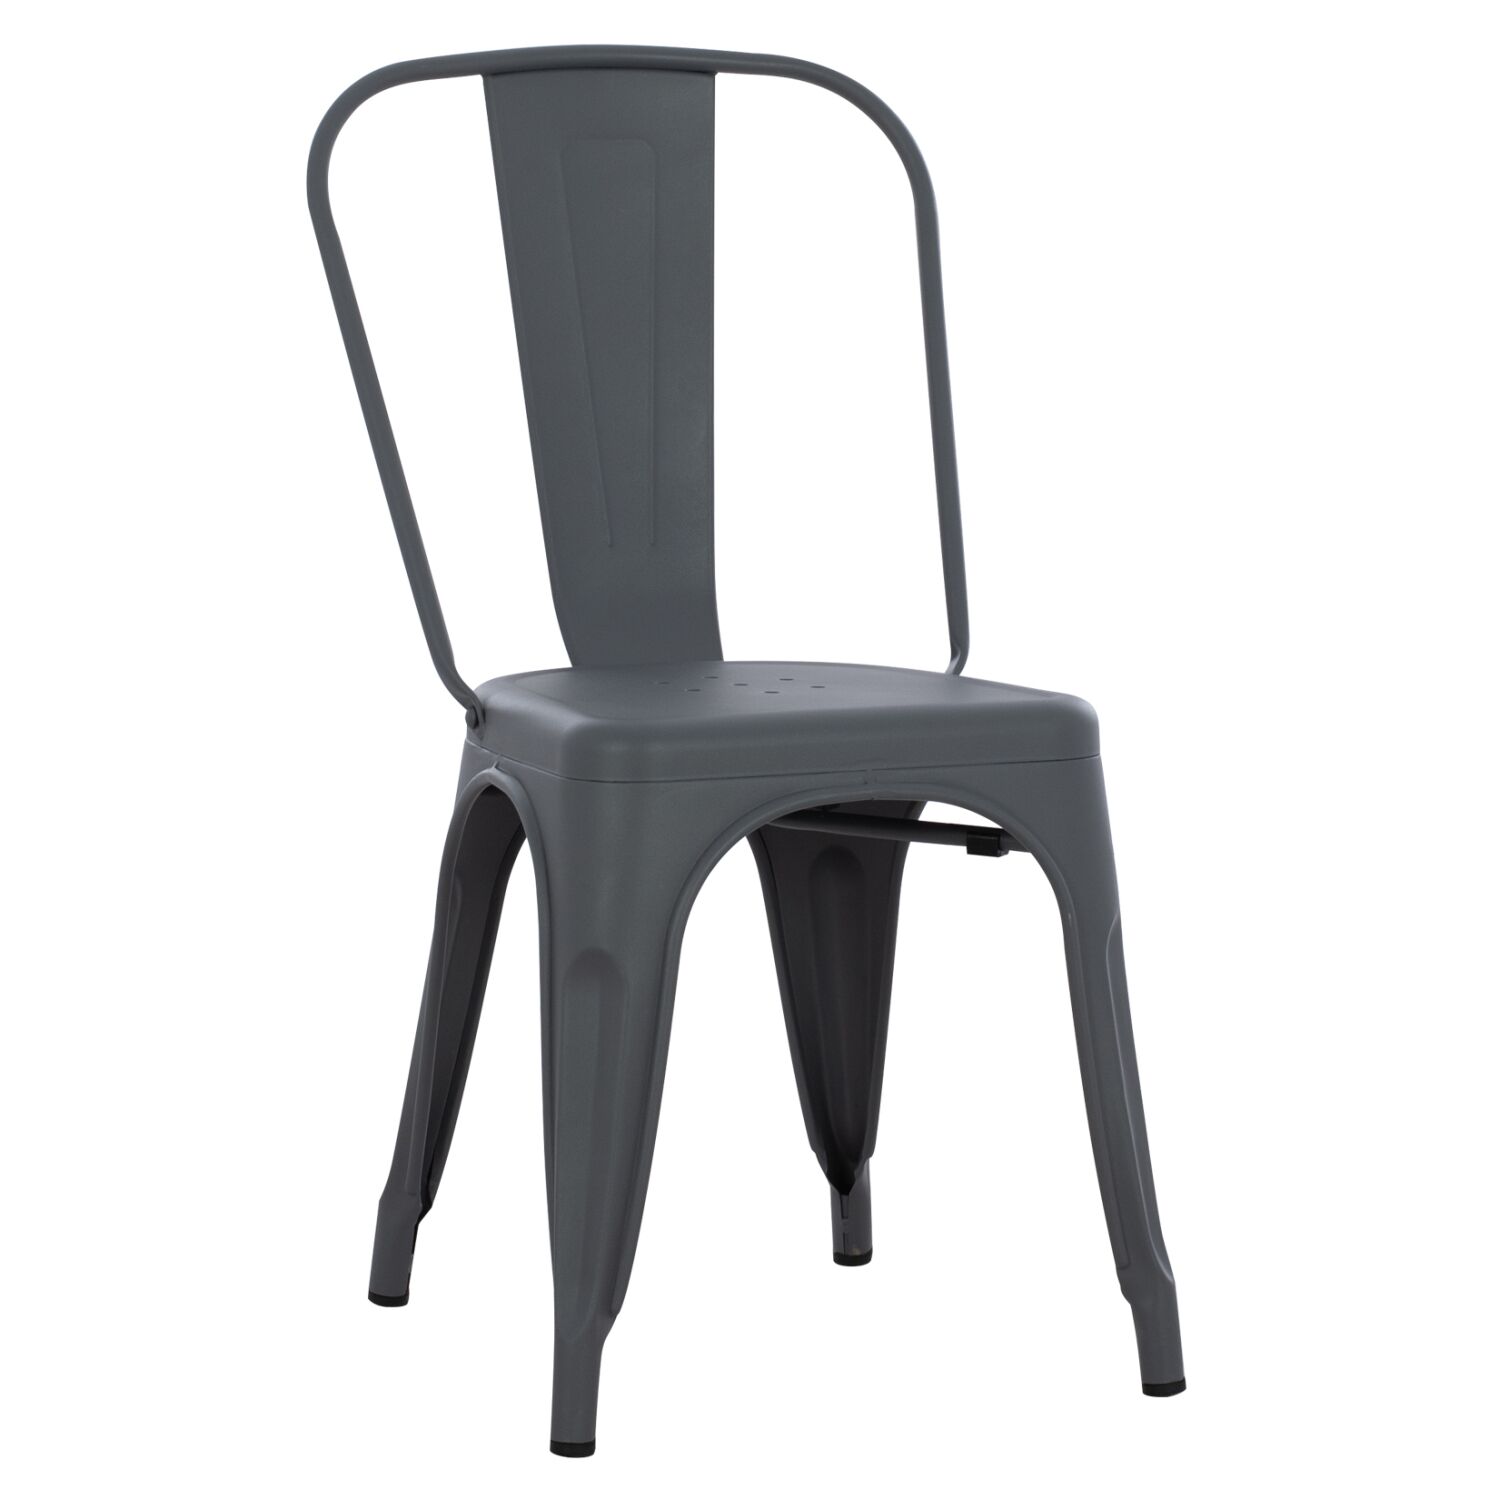 Metallic chair MELITA HM8641.10 in grey 43x50x82Hcm